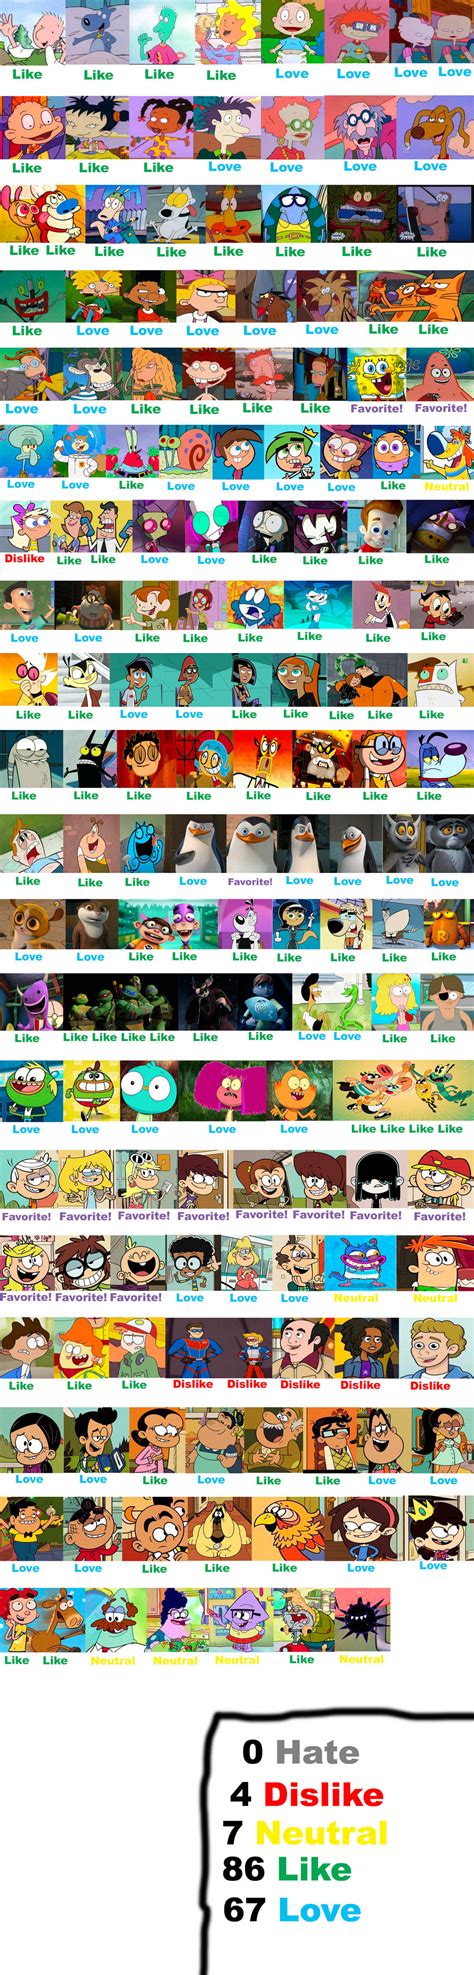 Nicktoons Protagonists Scorecard By Thomperfan On Deviantart